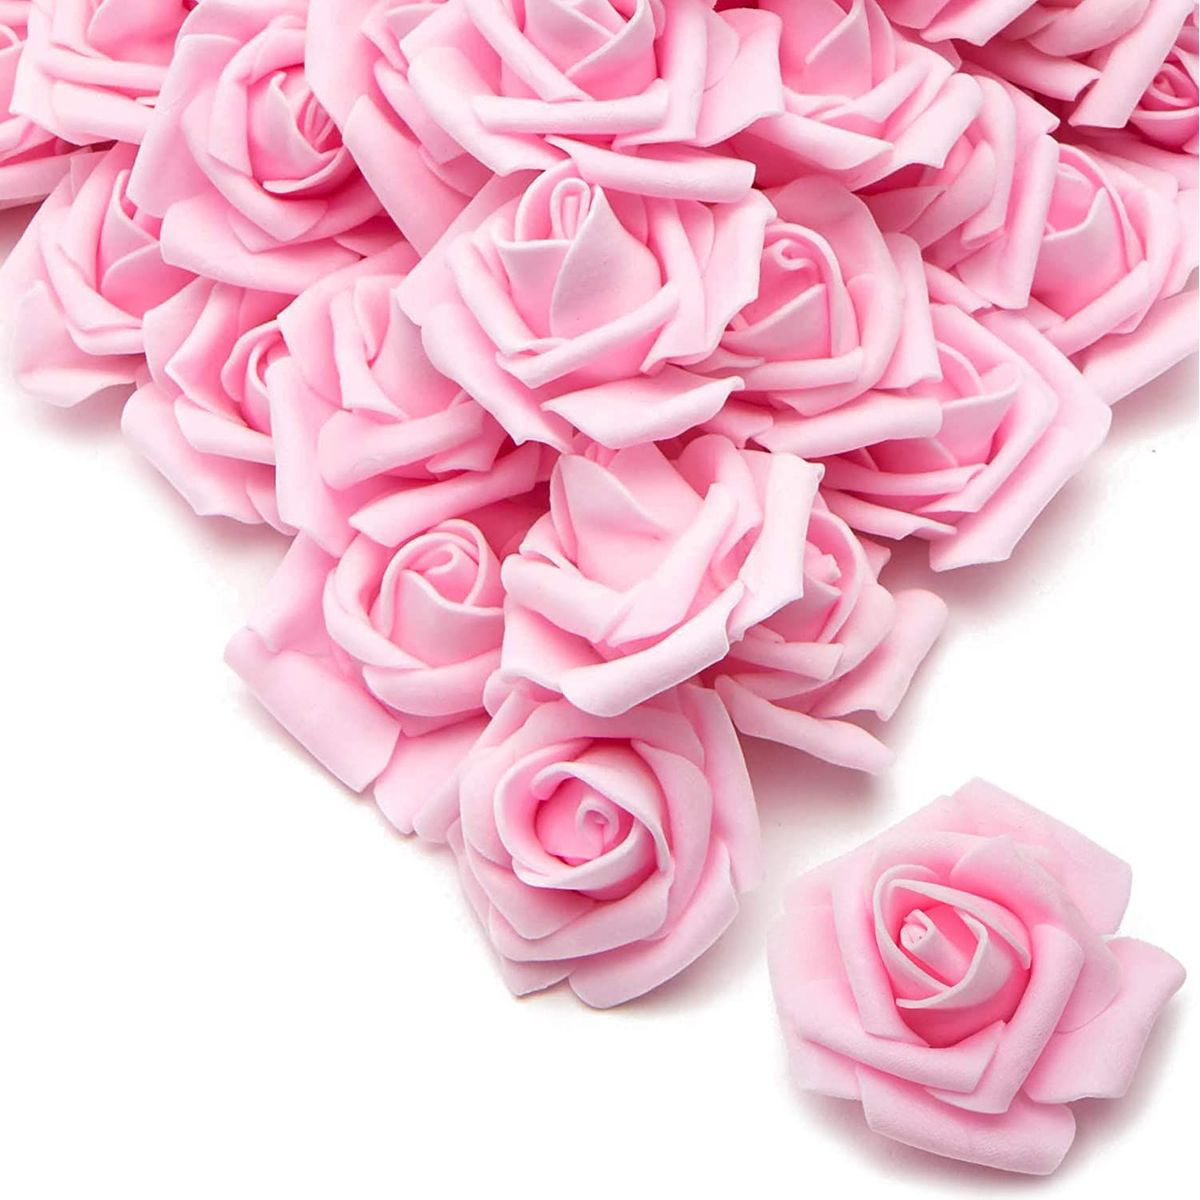 200 ROSE SILK FABRIC FLOWER HEAD ARTIFICIAL CRAFT DECOR WHOLESALE FREE EXPRESS 